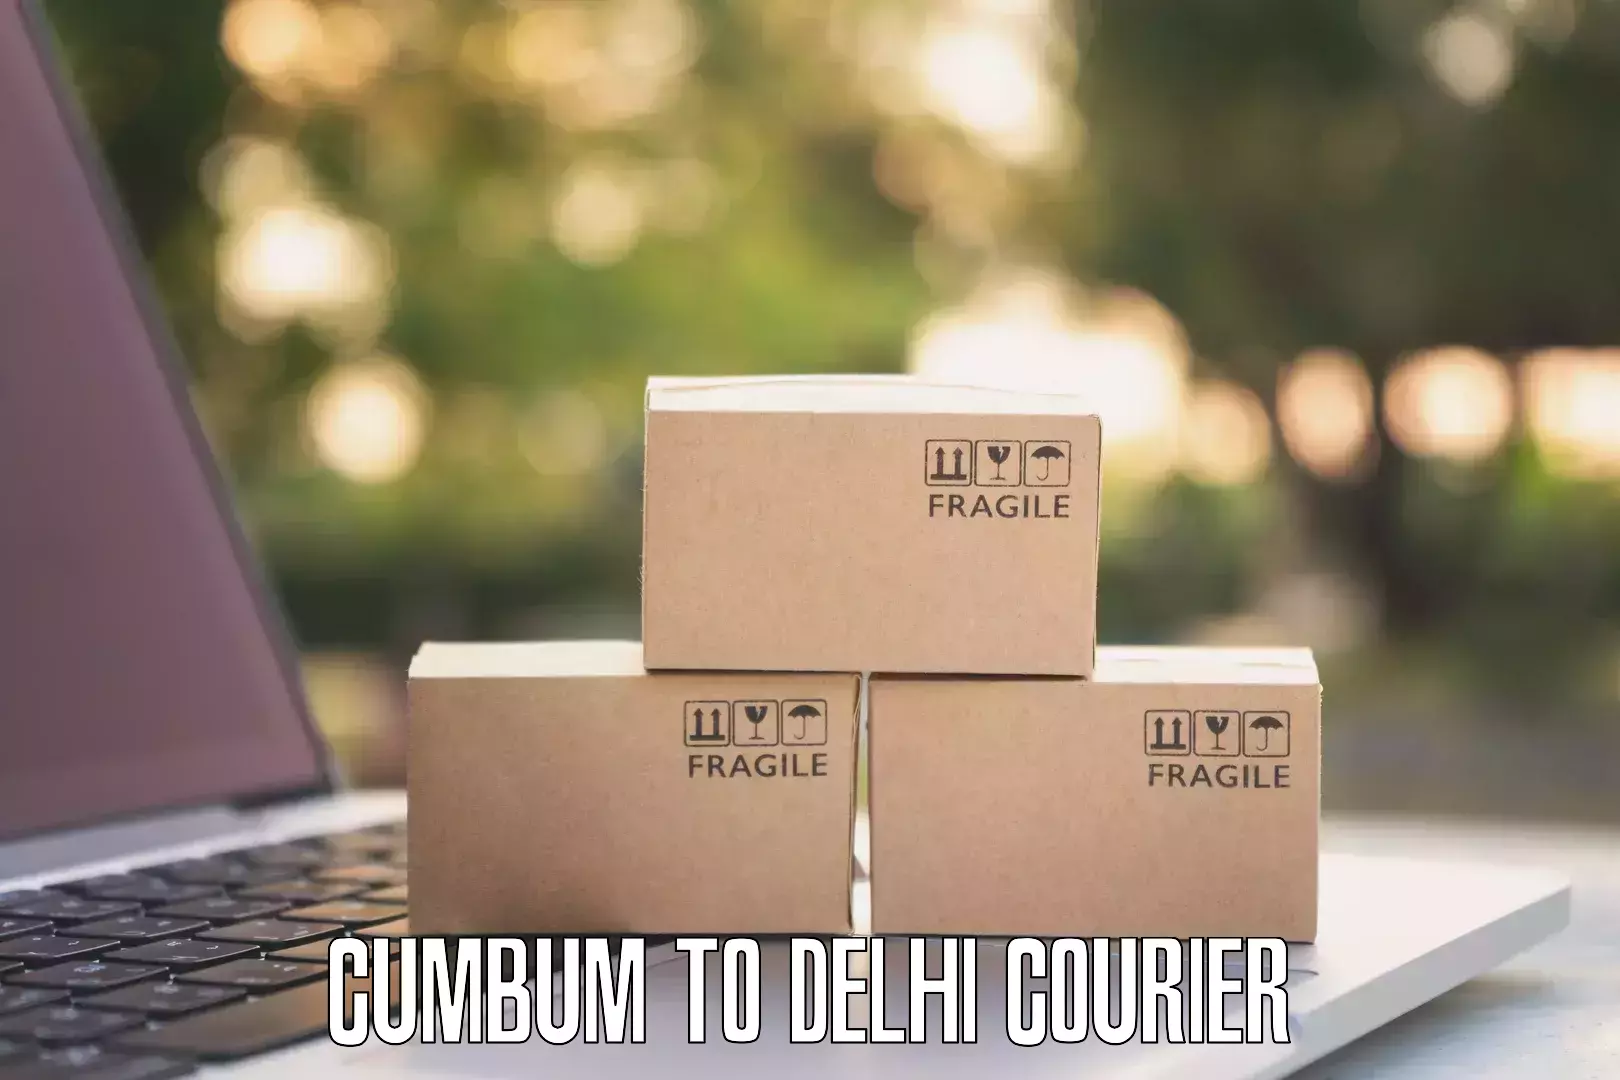 Courier service innovation Cumbum to Delhi